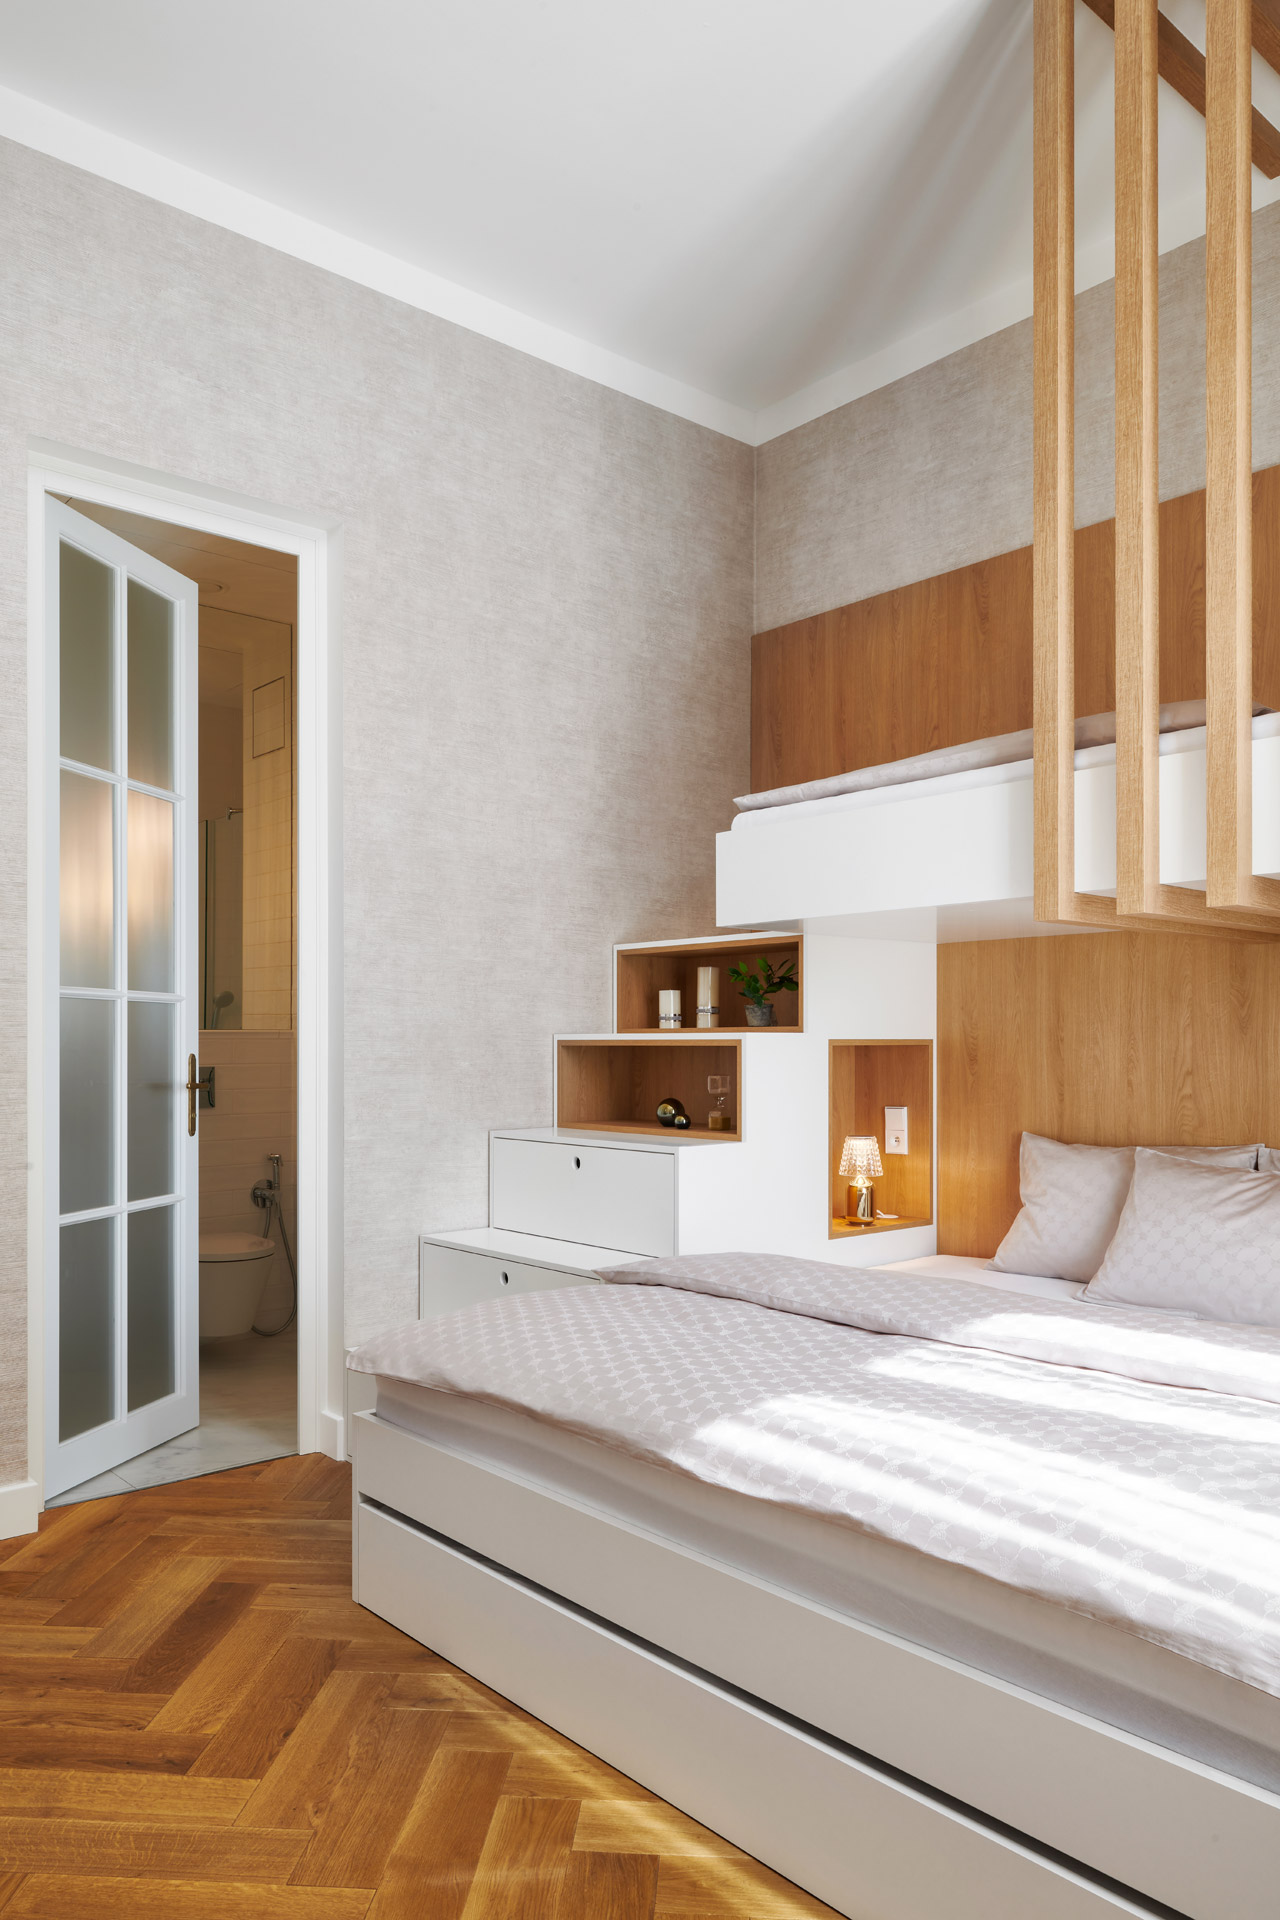 Hanák furniture, dream living, bedroom, sleep